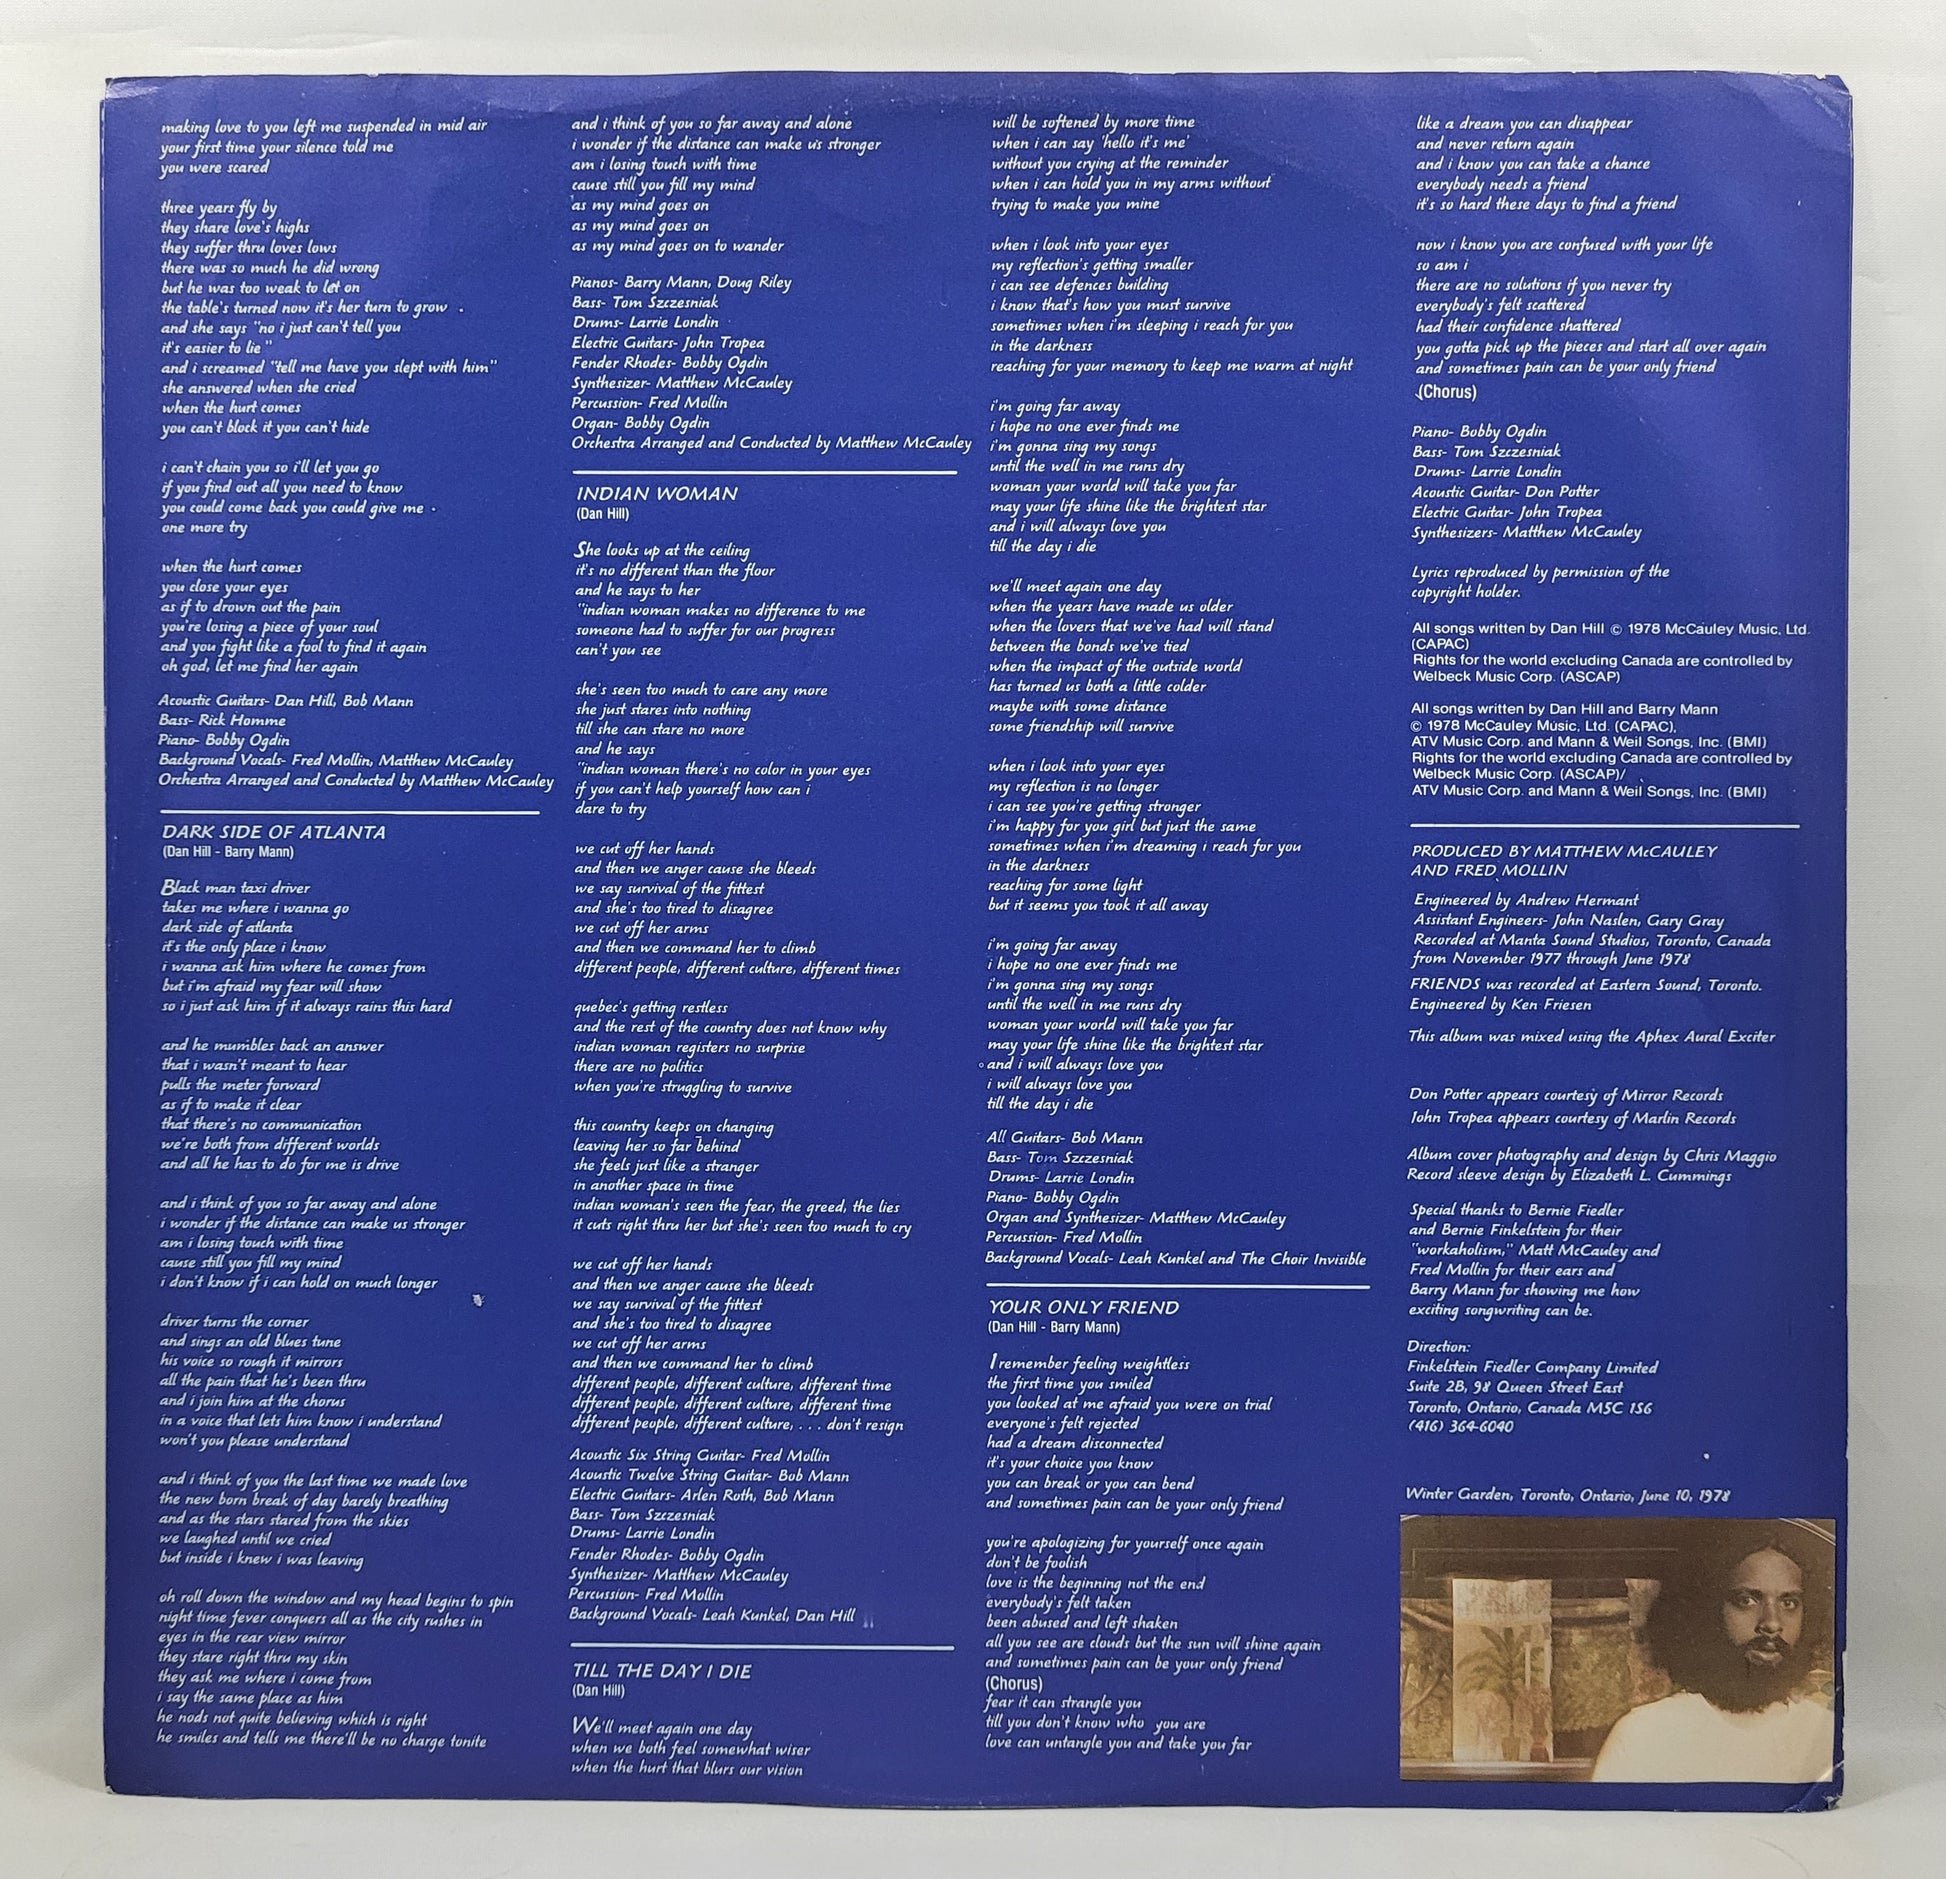 Dan Hill - Frozen in the Night [1978 Used Vinyl Record LP]